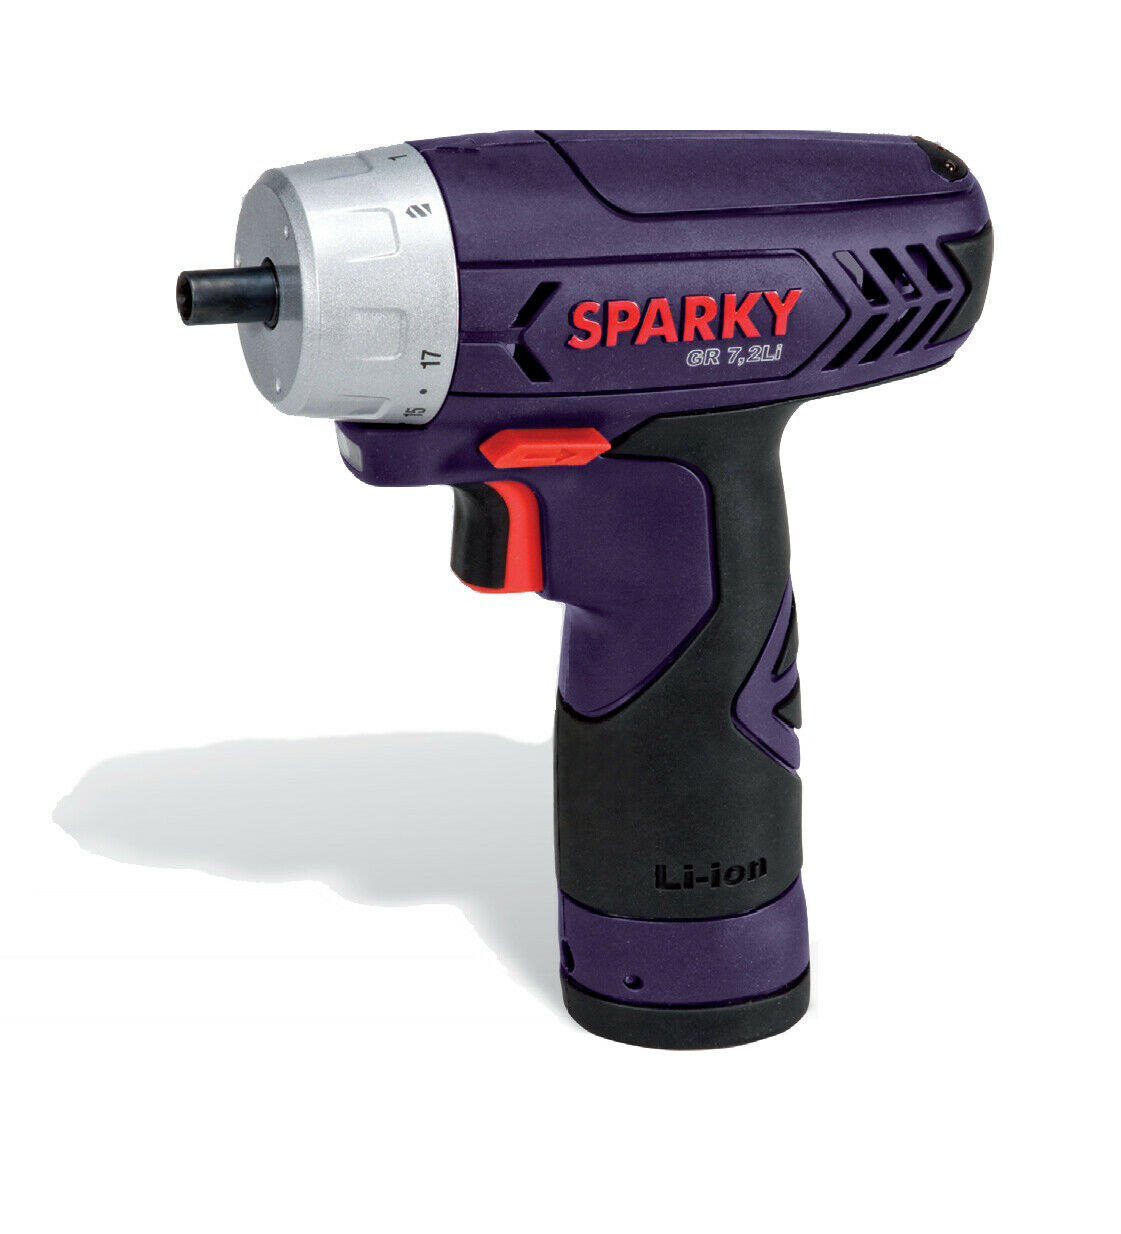 Sparky Professional Power Tools GR 7.2 Li Cordless Screwdriver 11W07